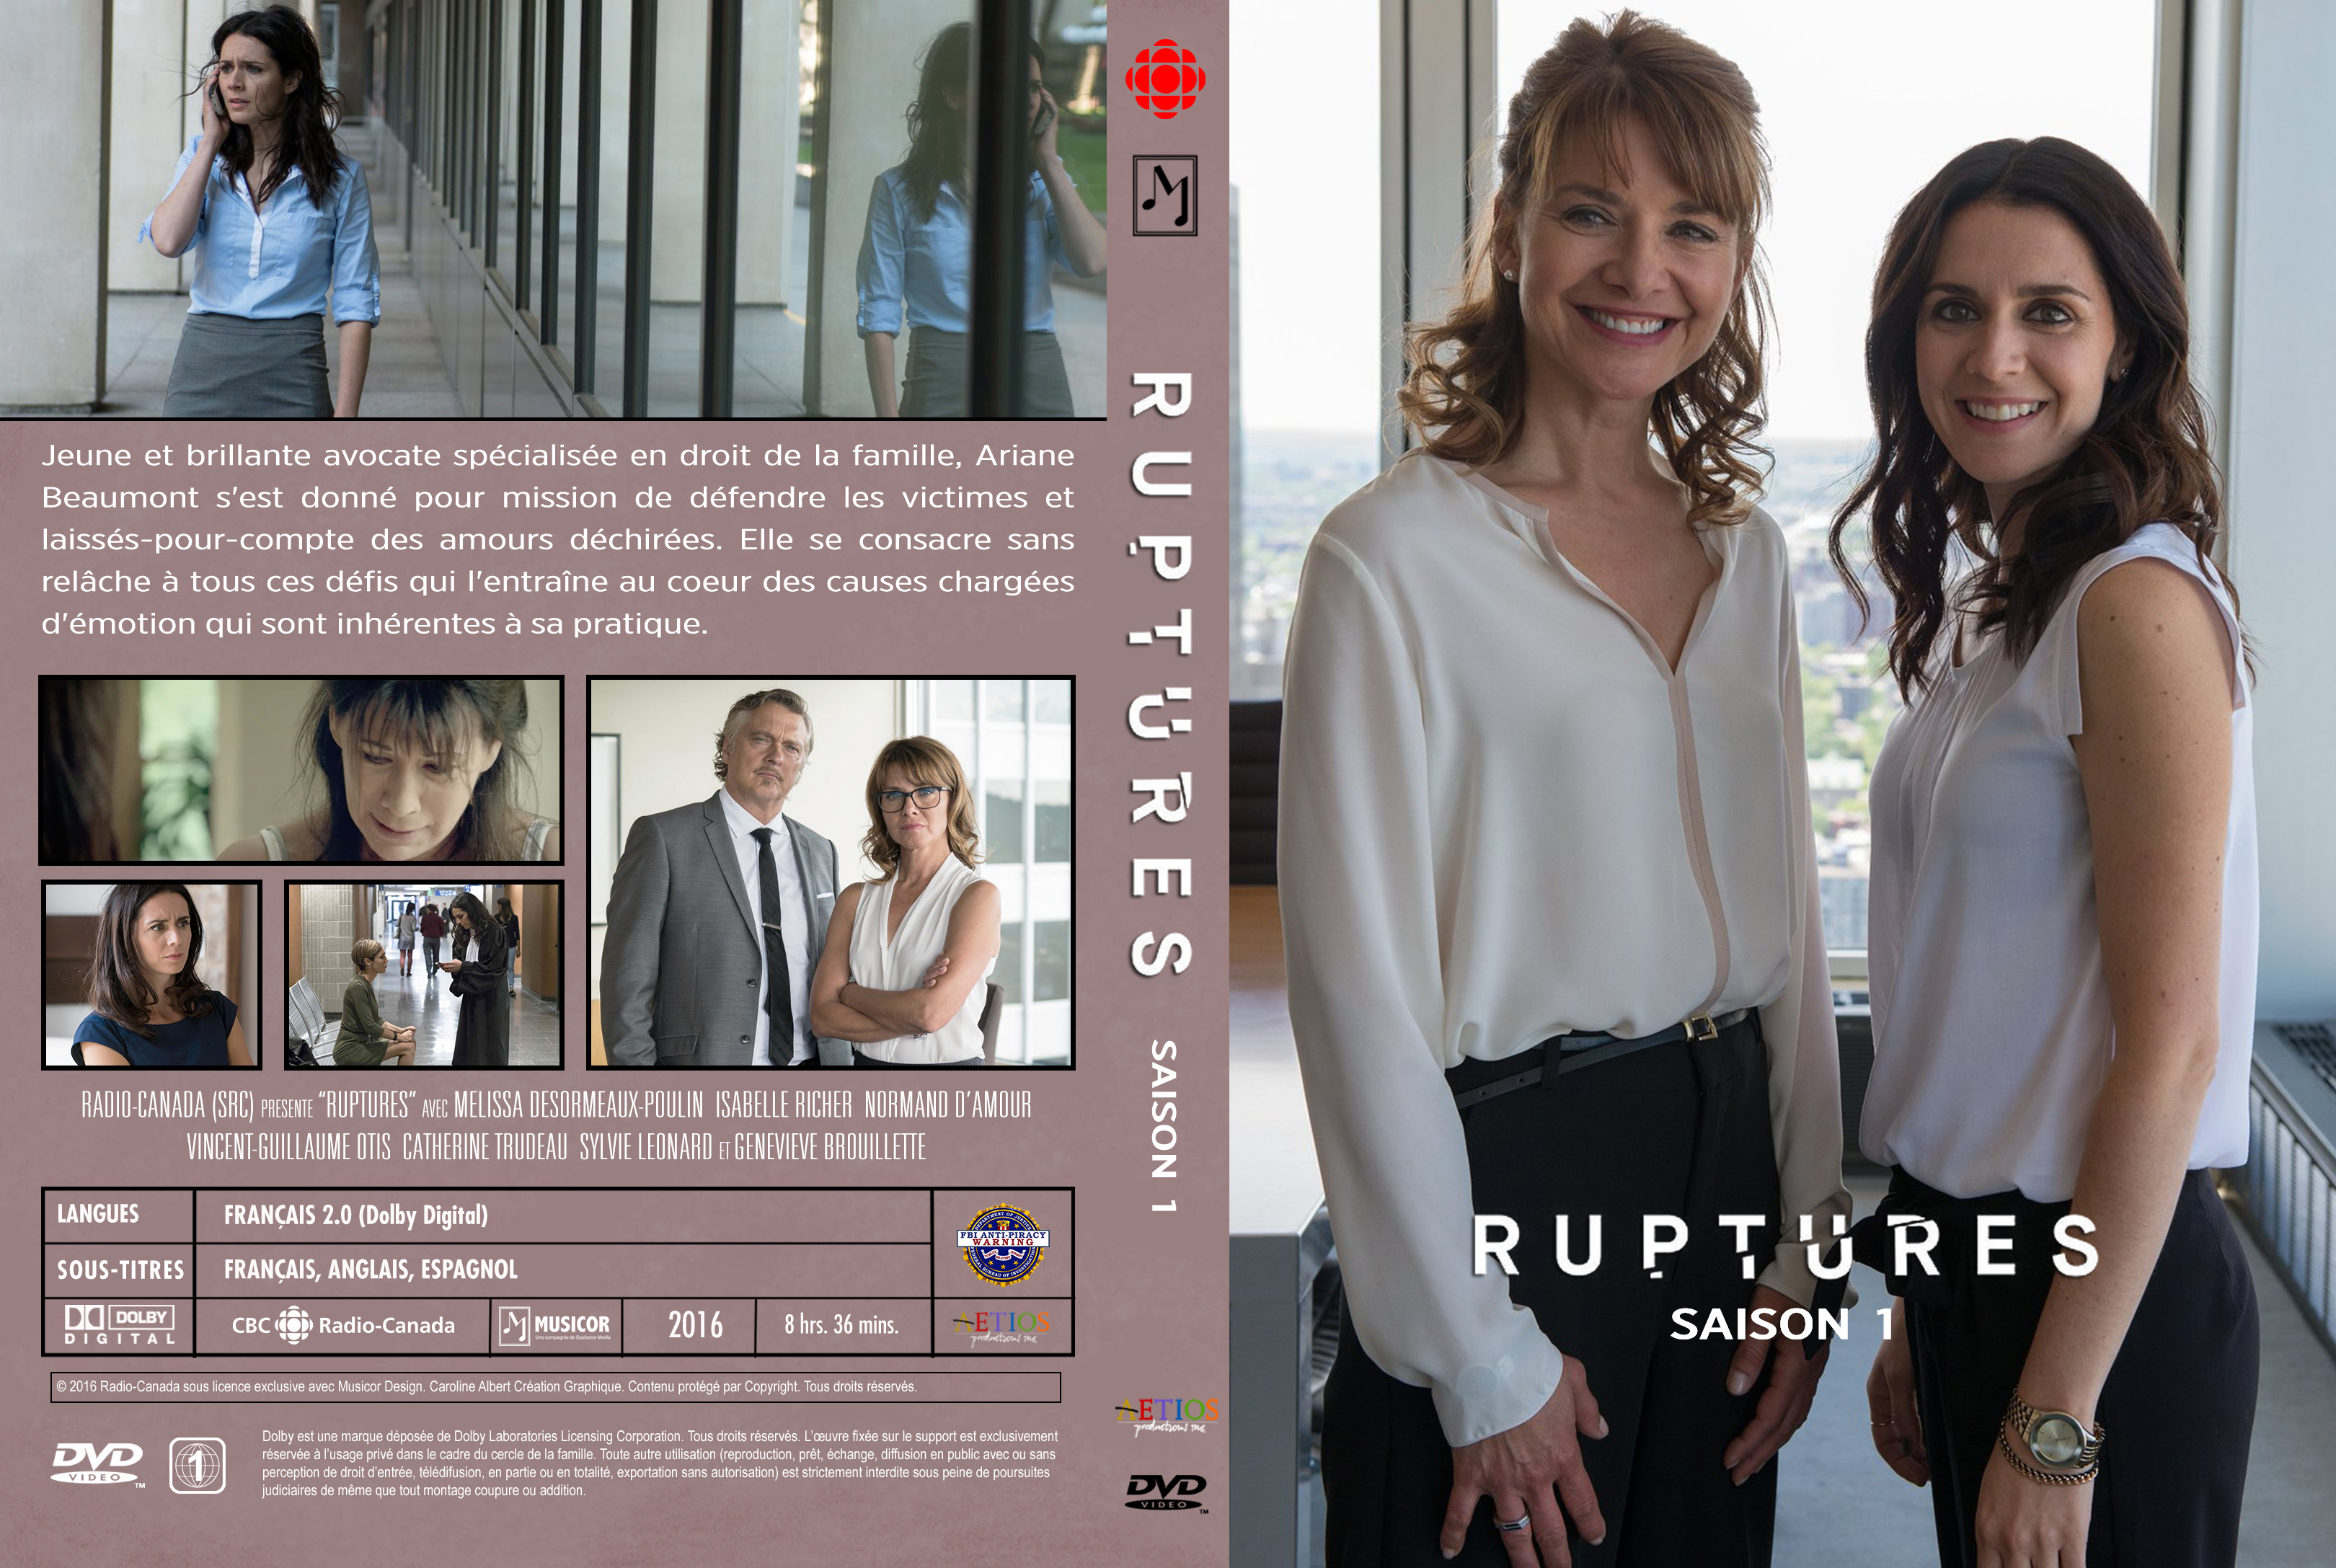 Jaquette DVD Ruptures Saison 1 custom